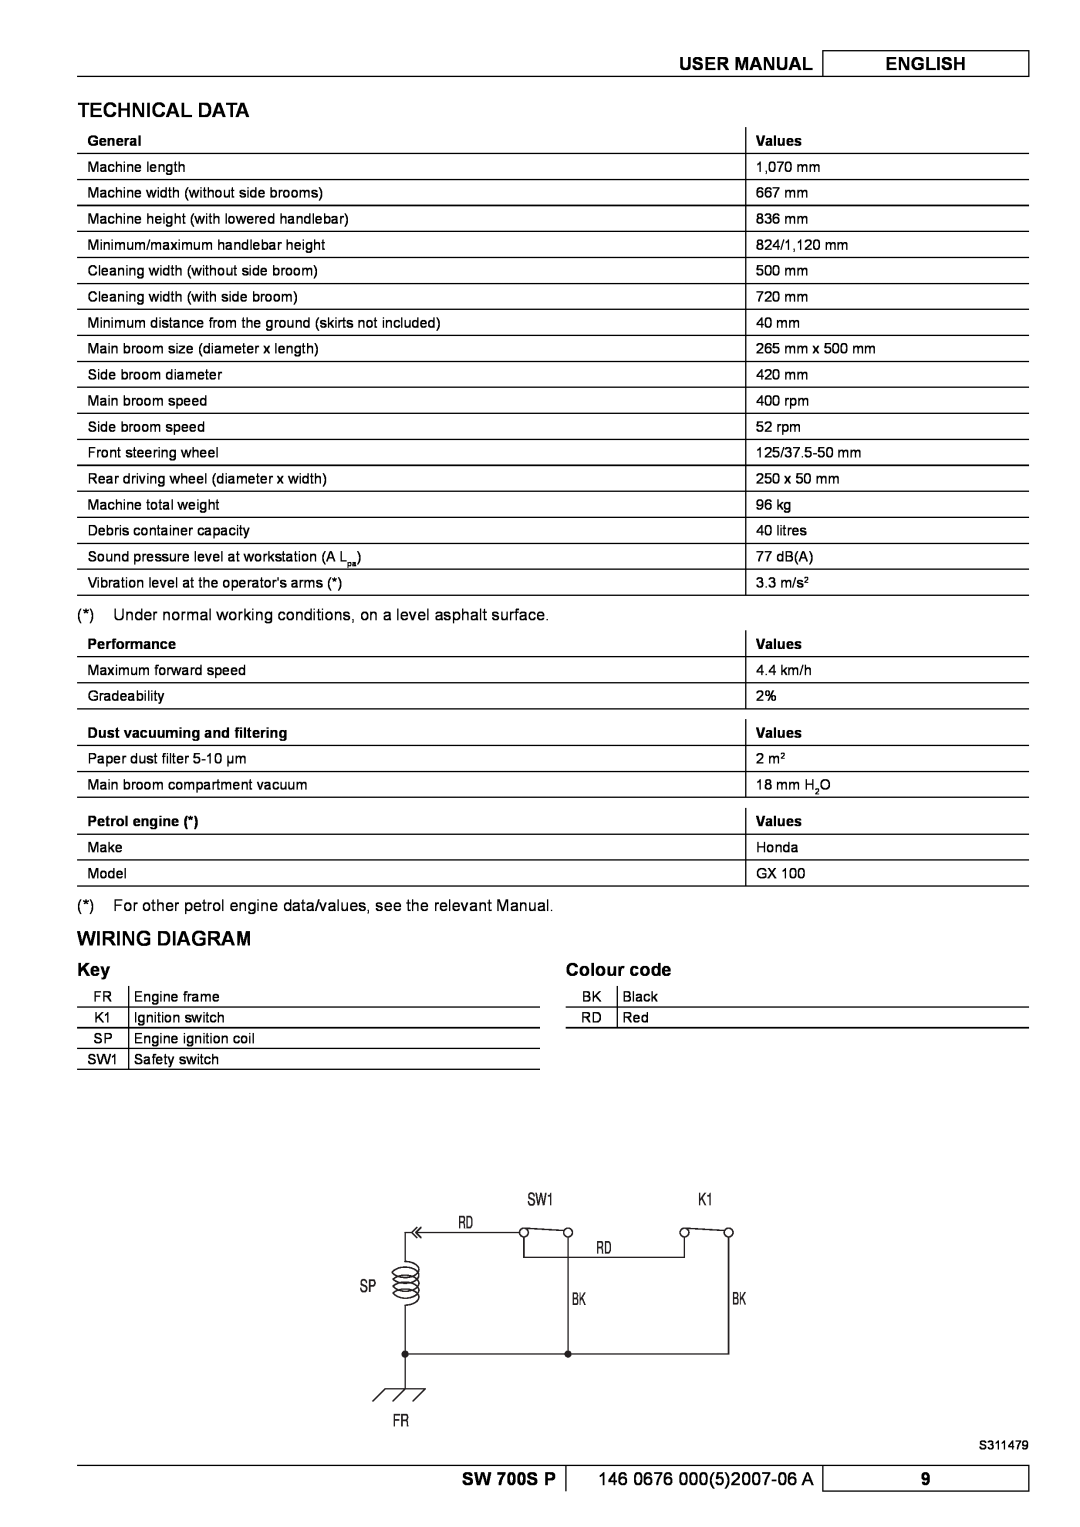 Nilfisk-Advance America SW 700S P Technical Data, Wiring Diagram, Colour code, User Manual, English, SW1K1 RD, Rd Bkbk 